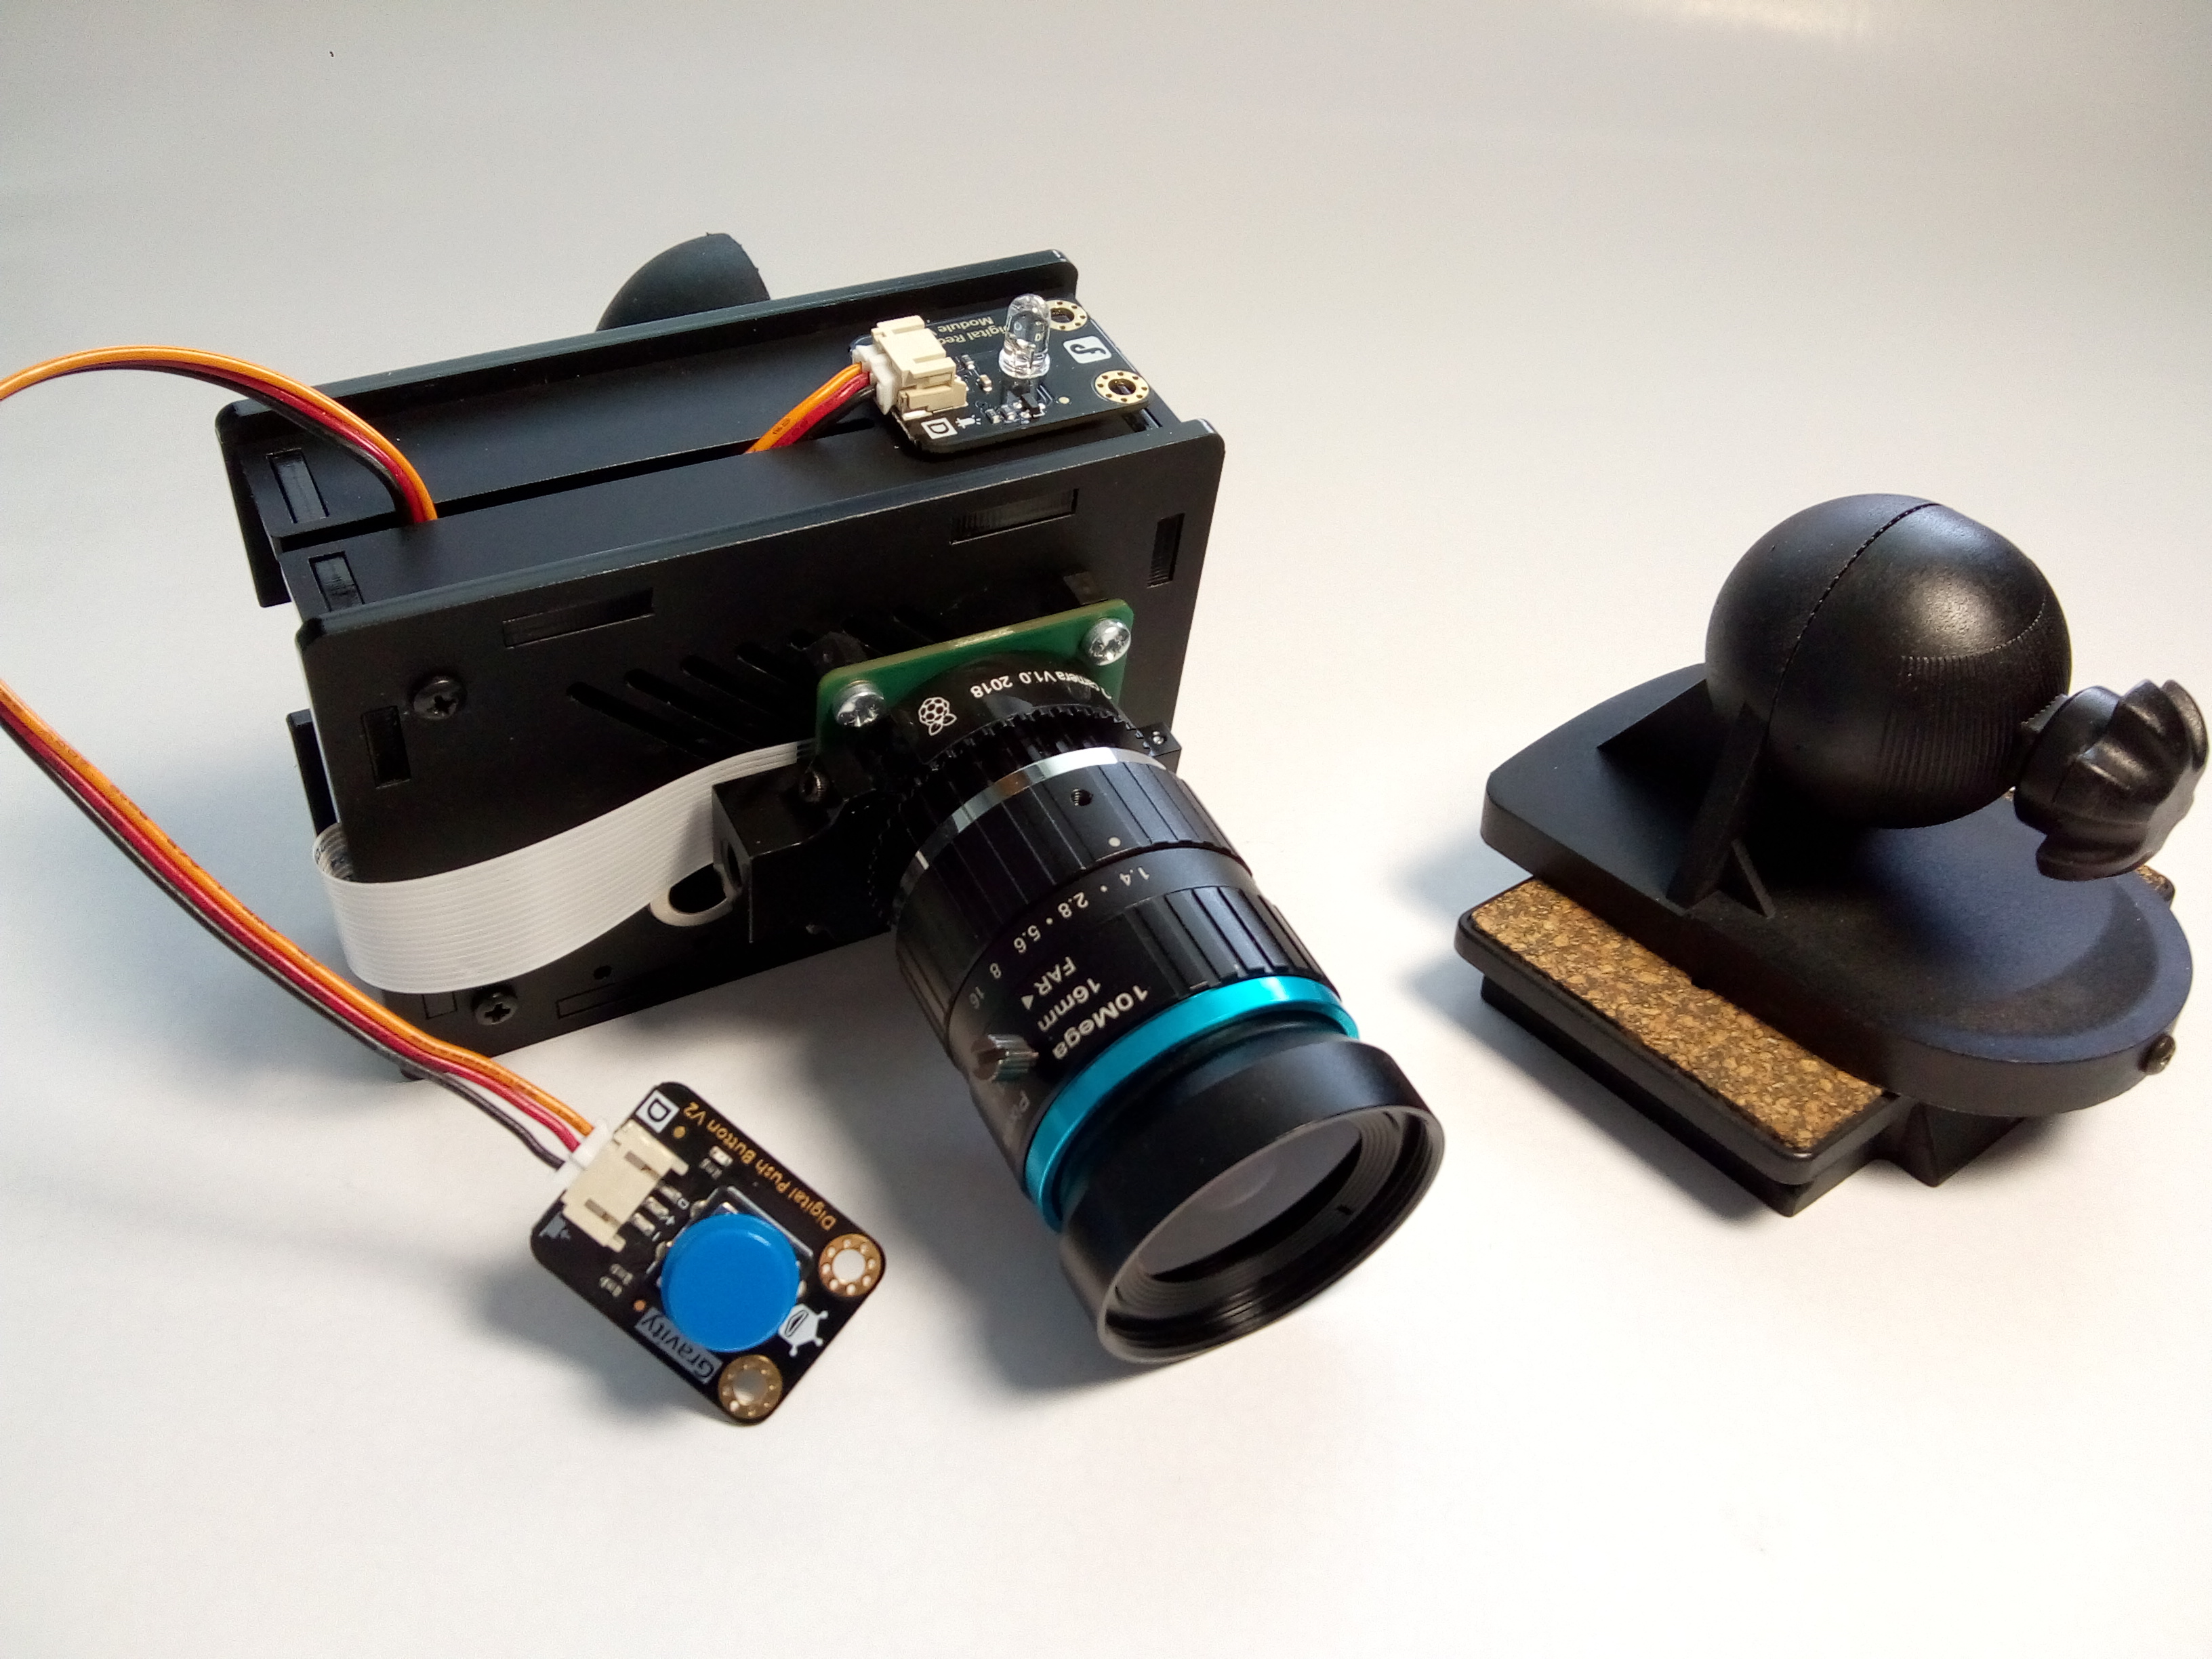 assembled raspberry pi high quality camera